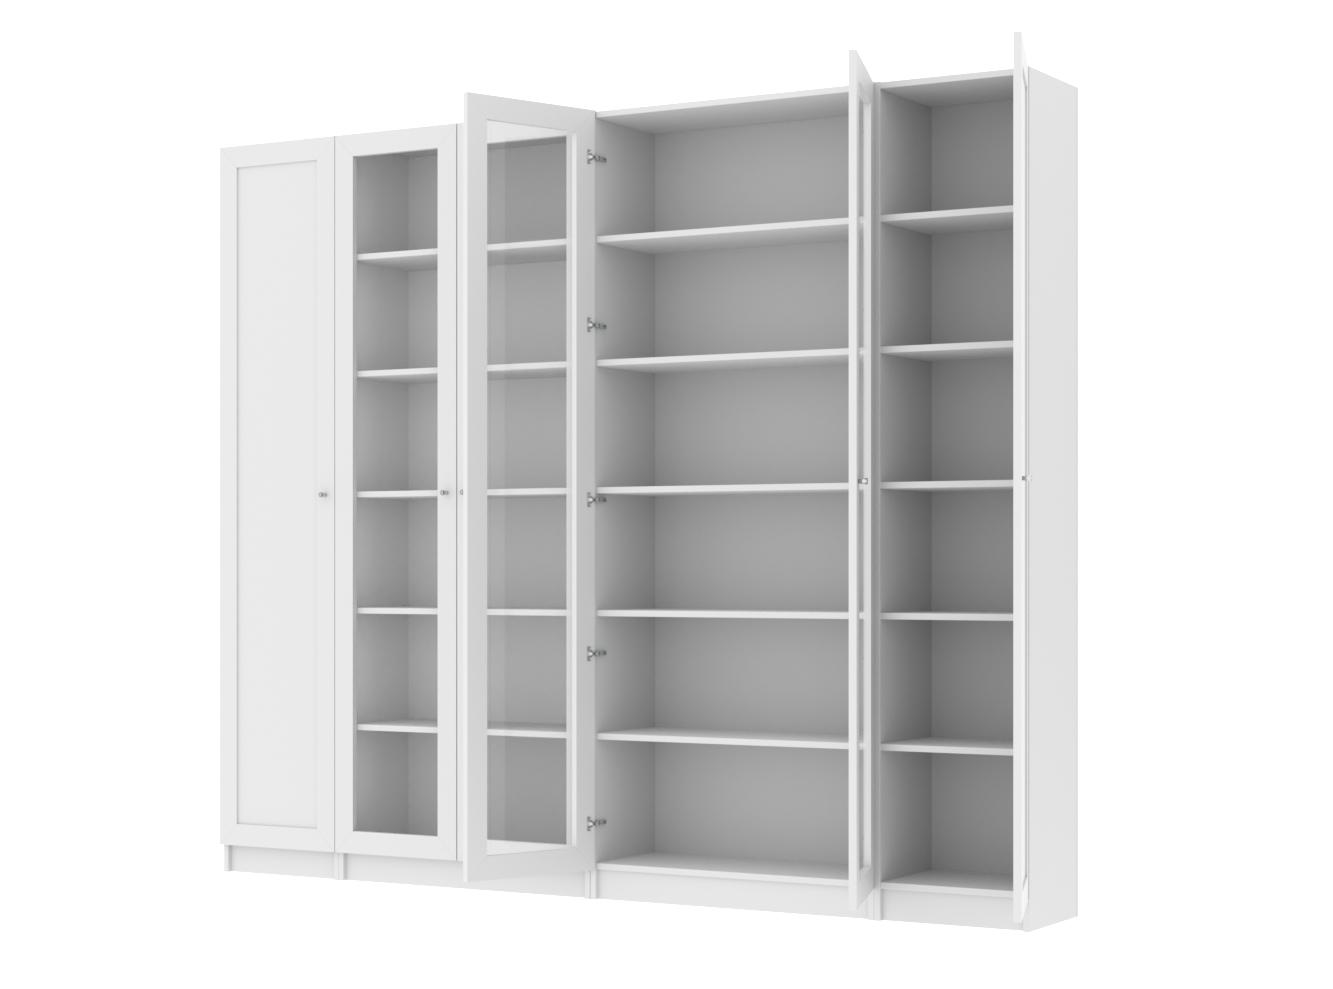 Книжный шкаф Билли 416 white ИКЕА (IKEA) изображение товара